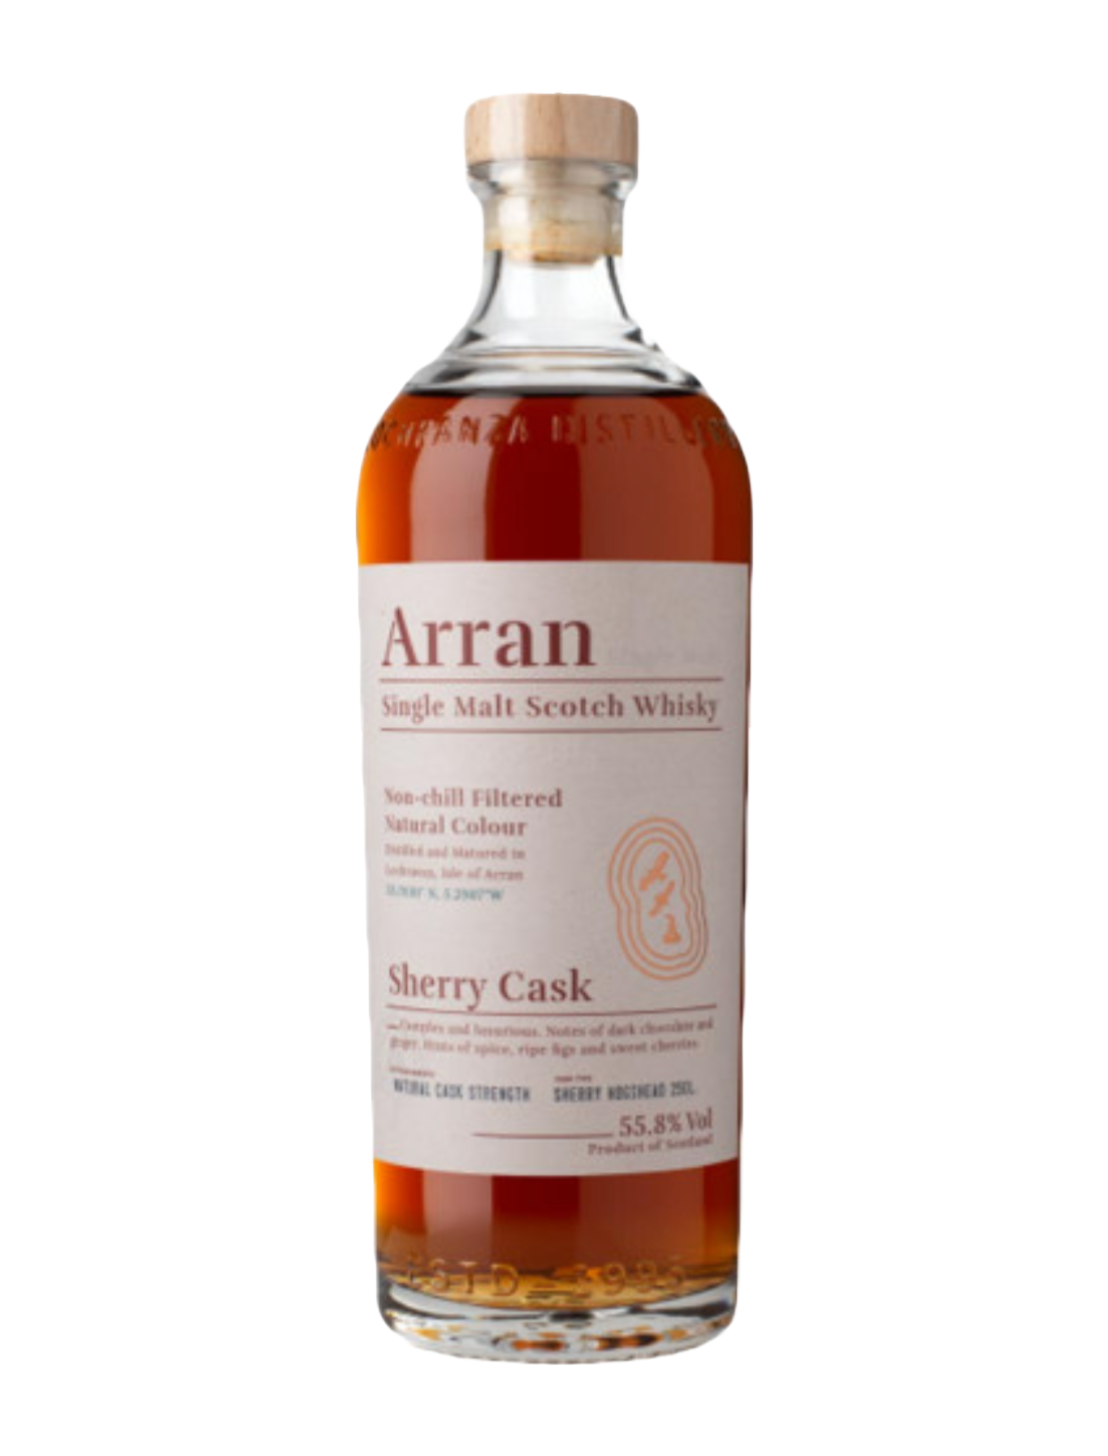 Elegant bottle of Arran Single Malt Scotch Sherry Cask The Bodega in front of a plain white background